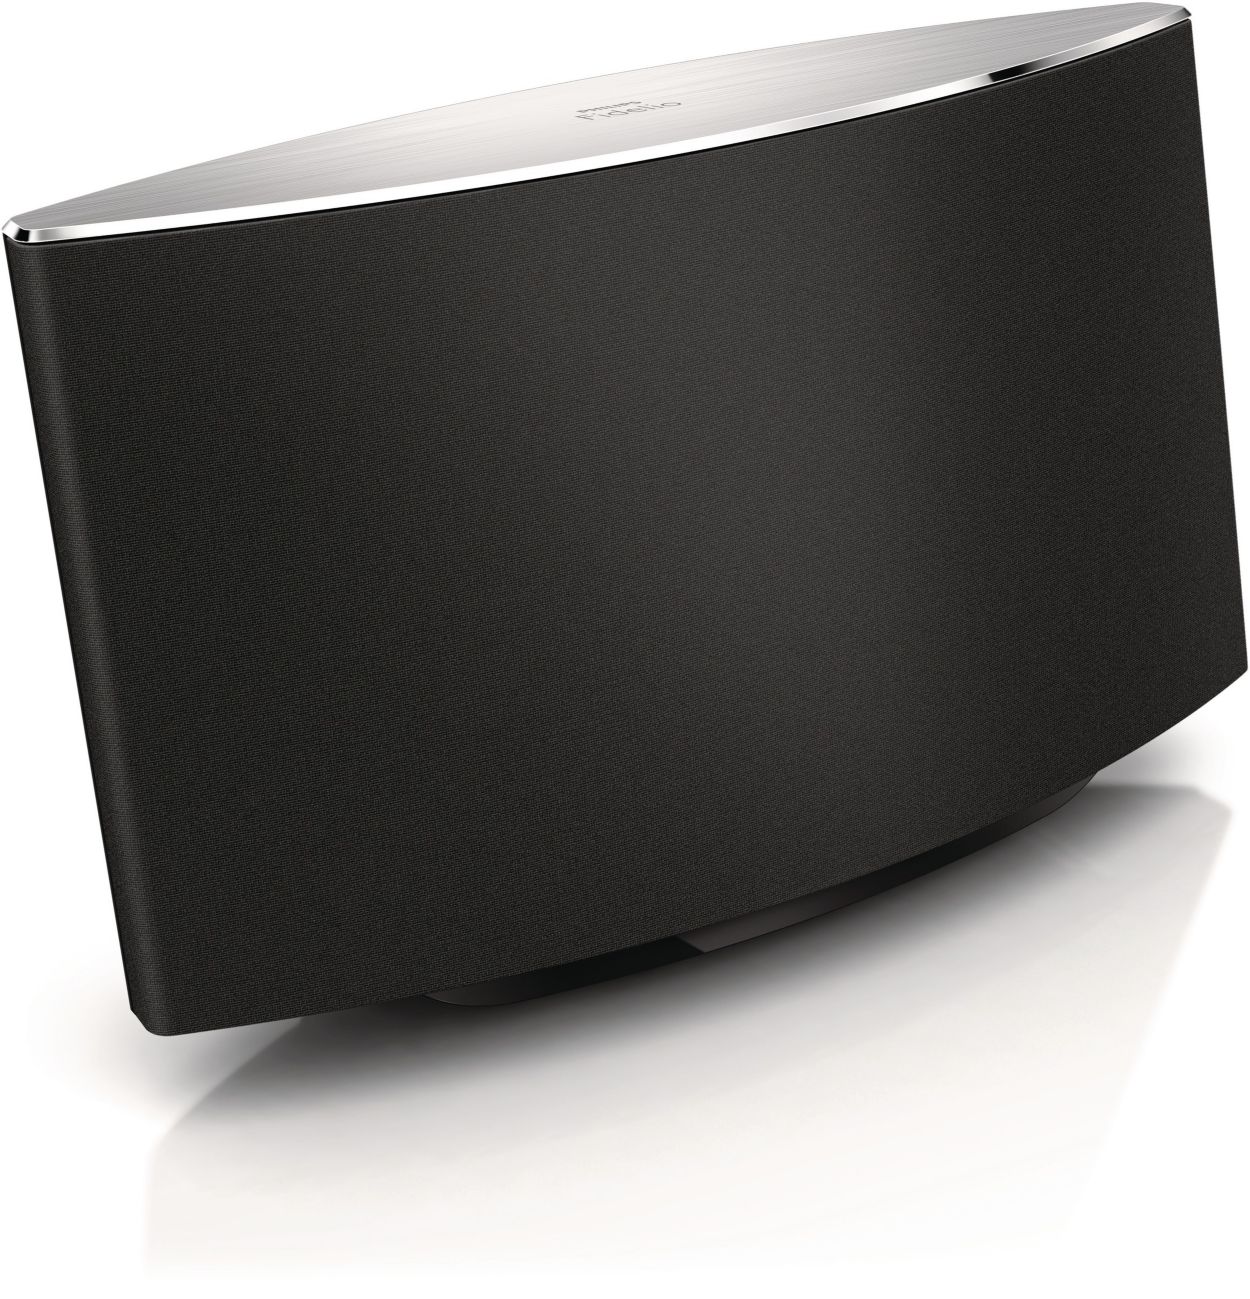 Adolescent opmerking uitslag SoundAvia wireless speaker AD7000W/37 | Fidelio